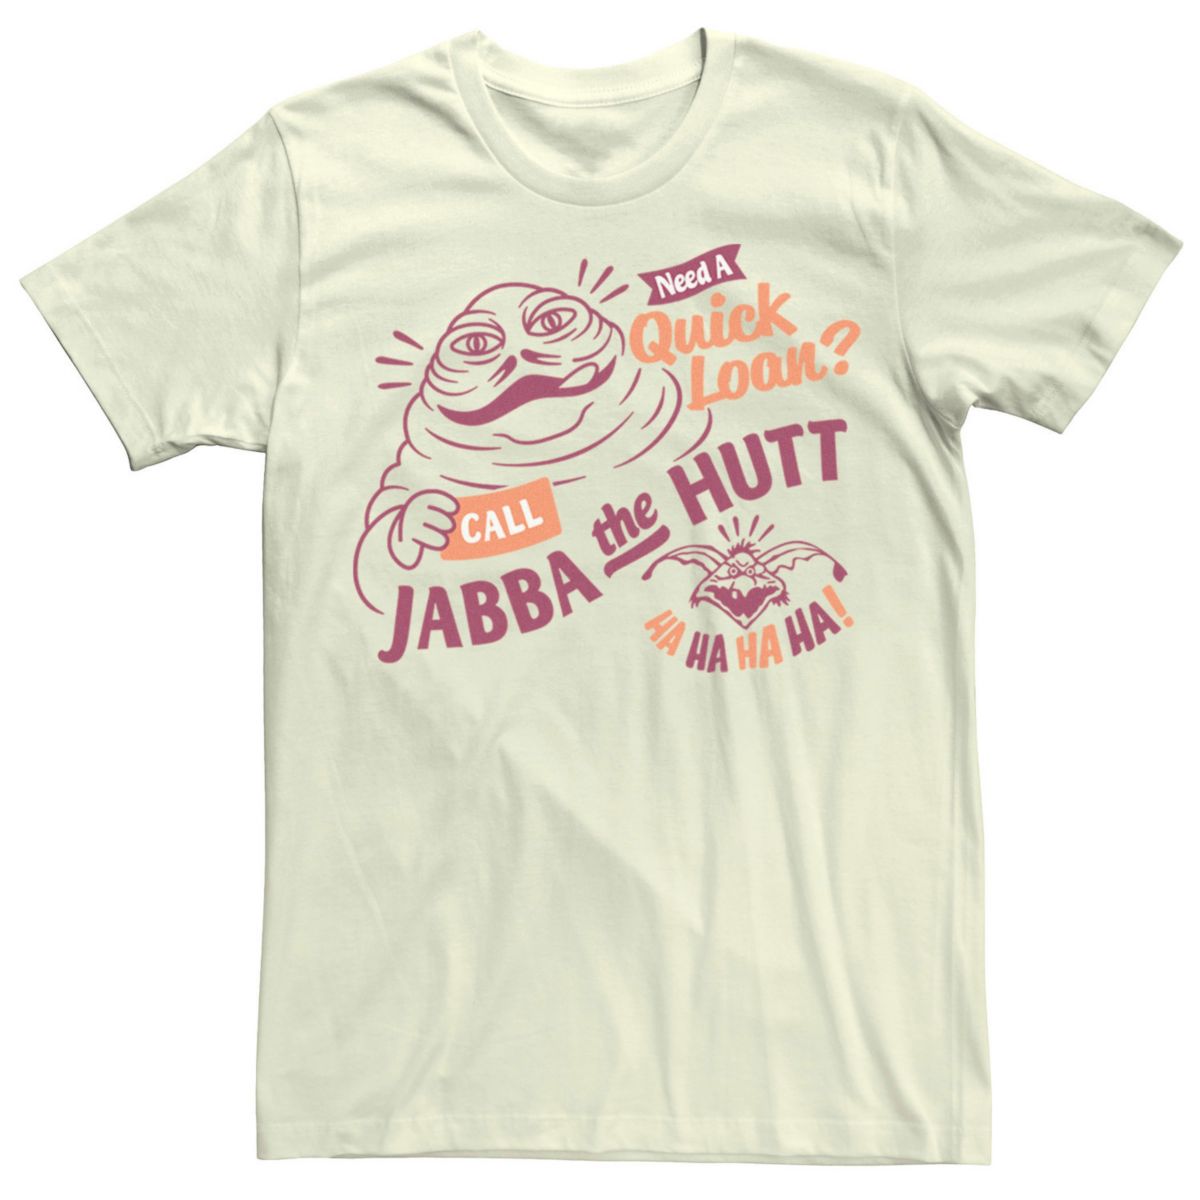 Мужская футболка Star Wars Jabba The Hutt Need A Quick Loan Star Wars